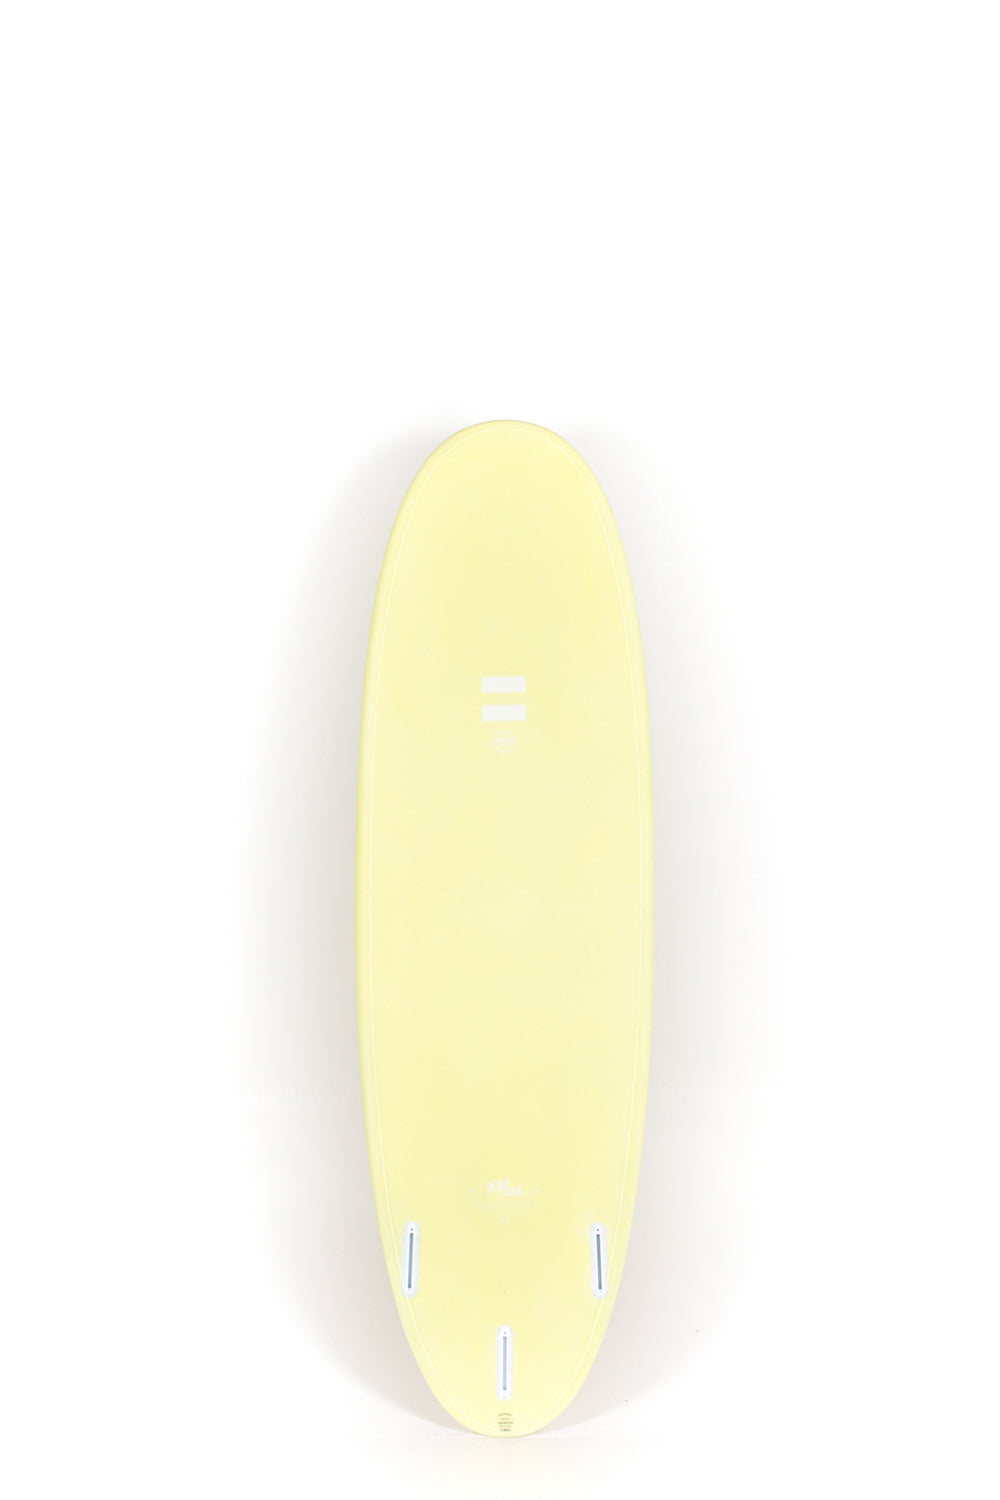 
                  
                    Pukas Surf Shop - Indio Endurance - PLUS Banana Light - 6´6" x 23 x 3 3/8 - 60L
                  
                